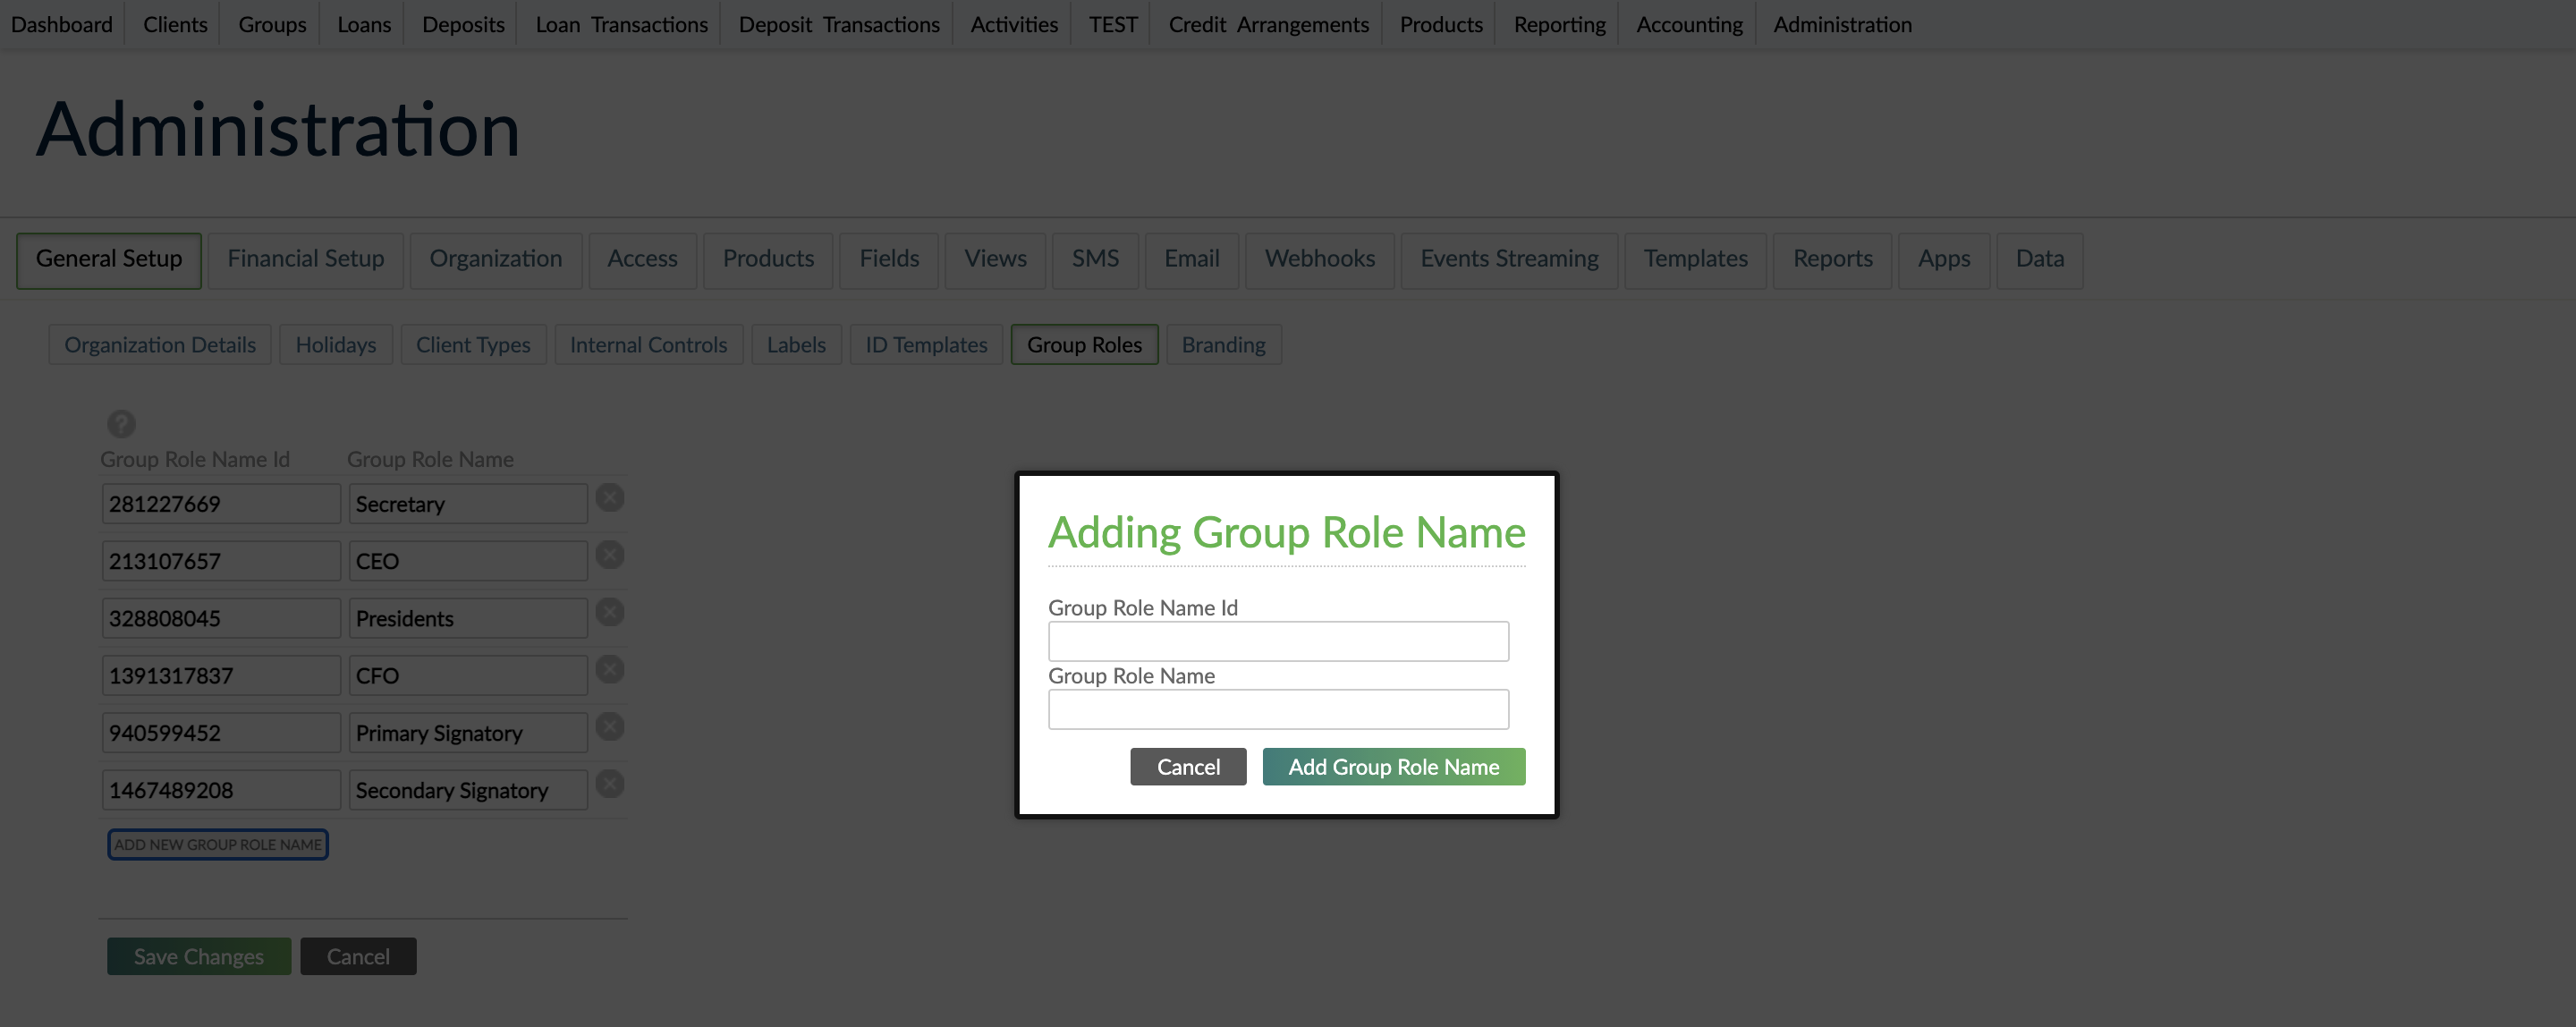 Adding Group Role Name dialog